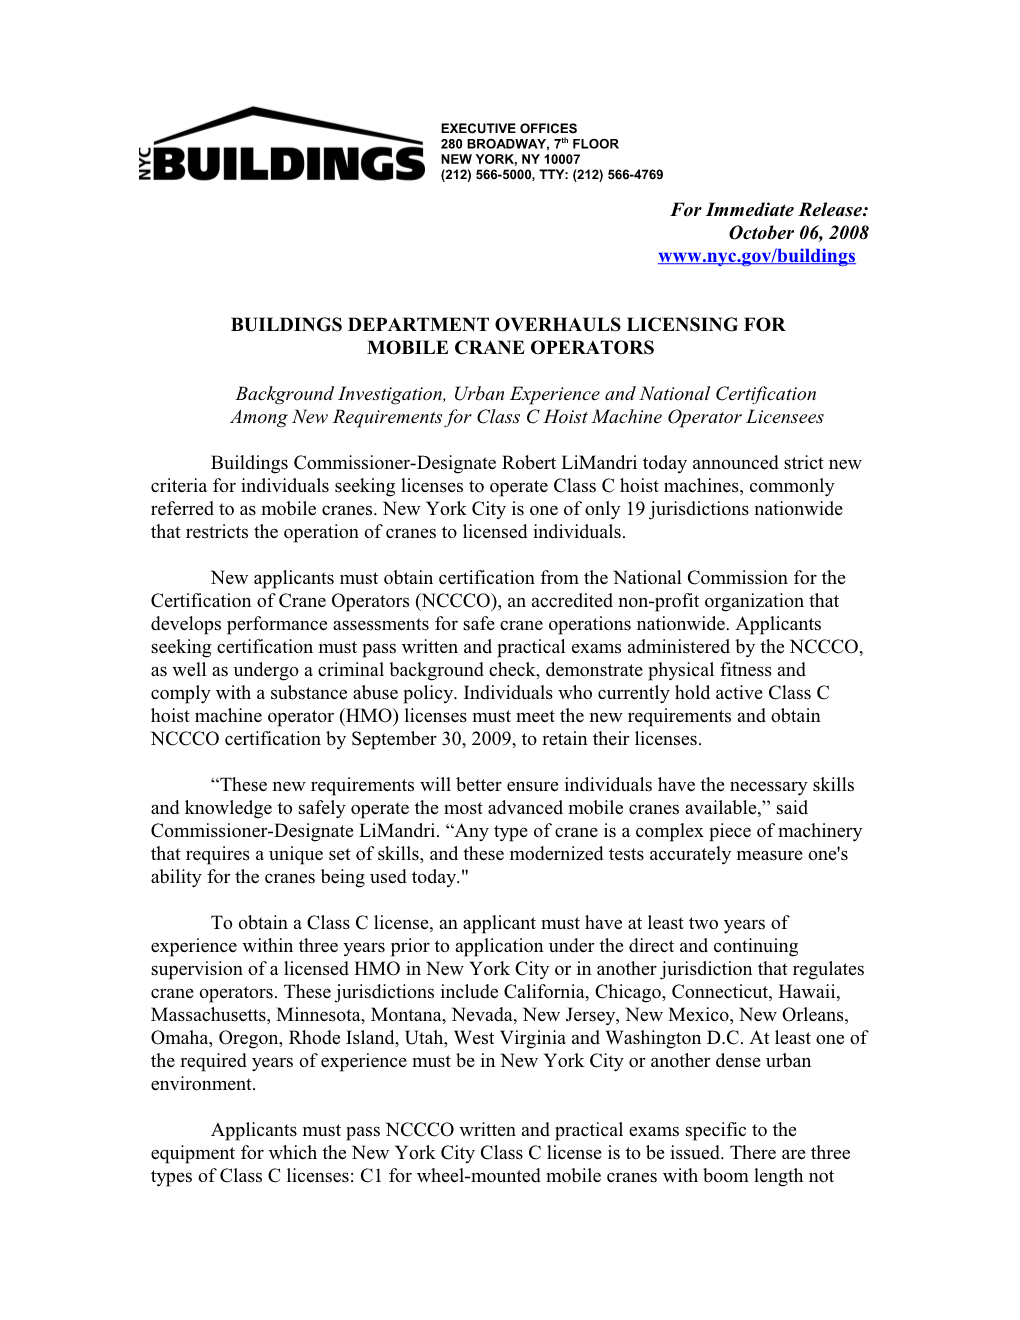 Buildings Department Overhauls Licensing For